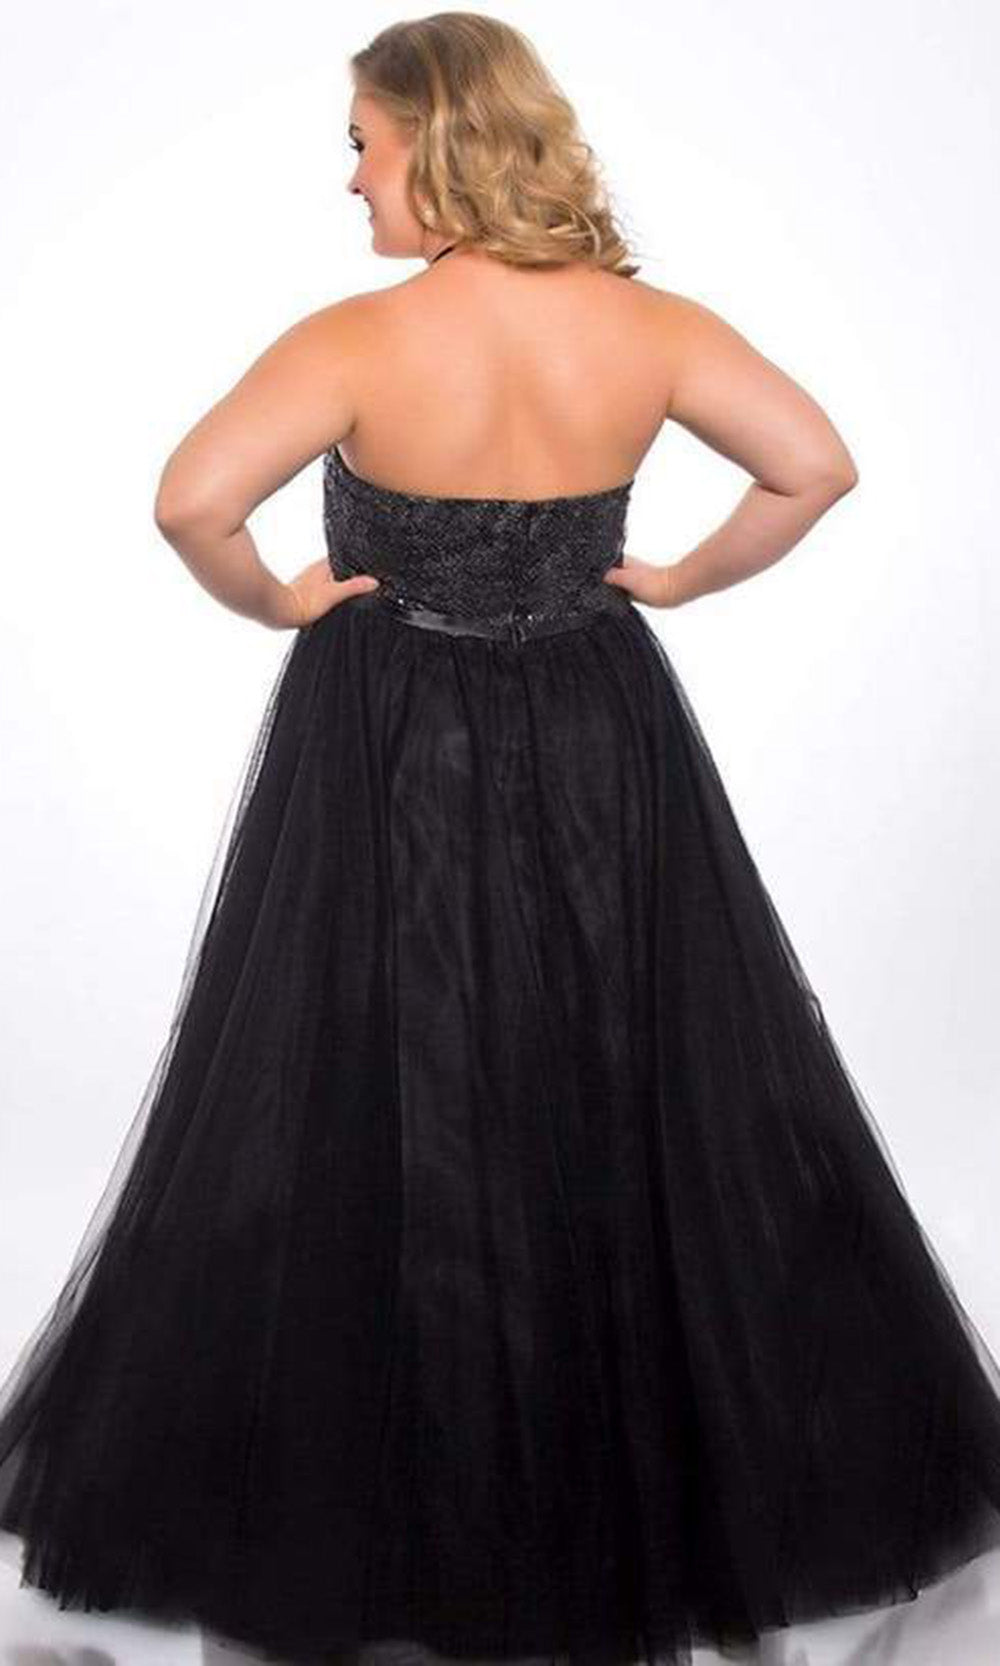 Sydney's Closet - Ornate Halter Neck A-Line Dress In Black